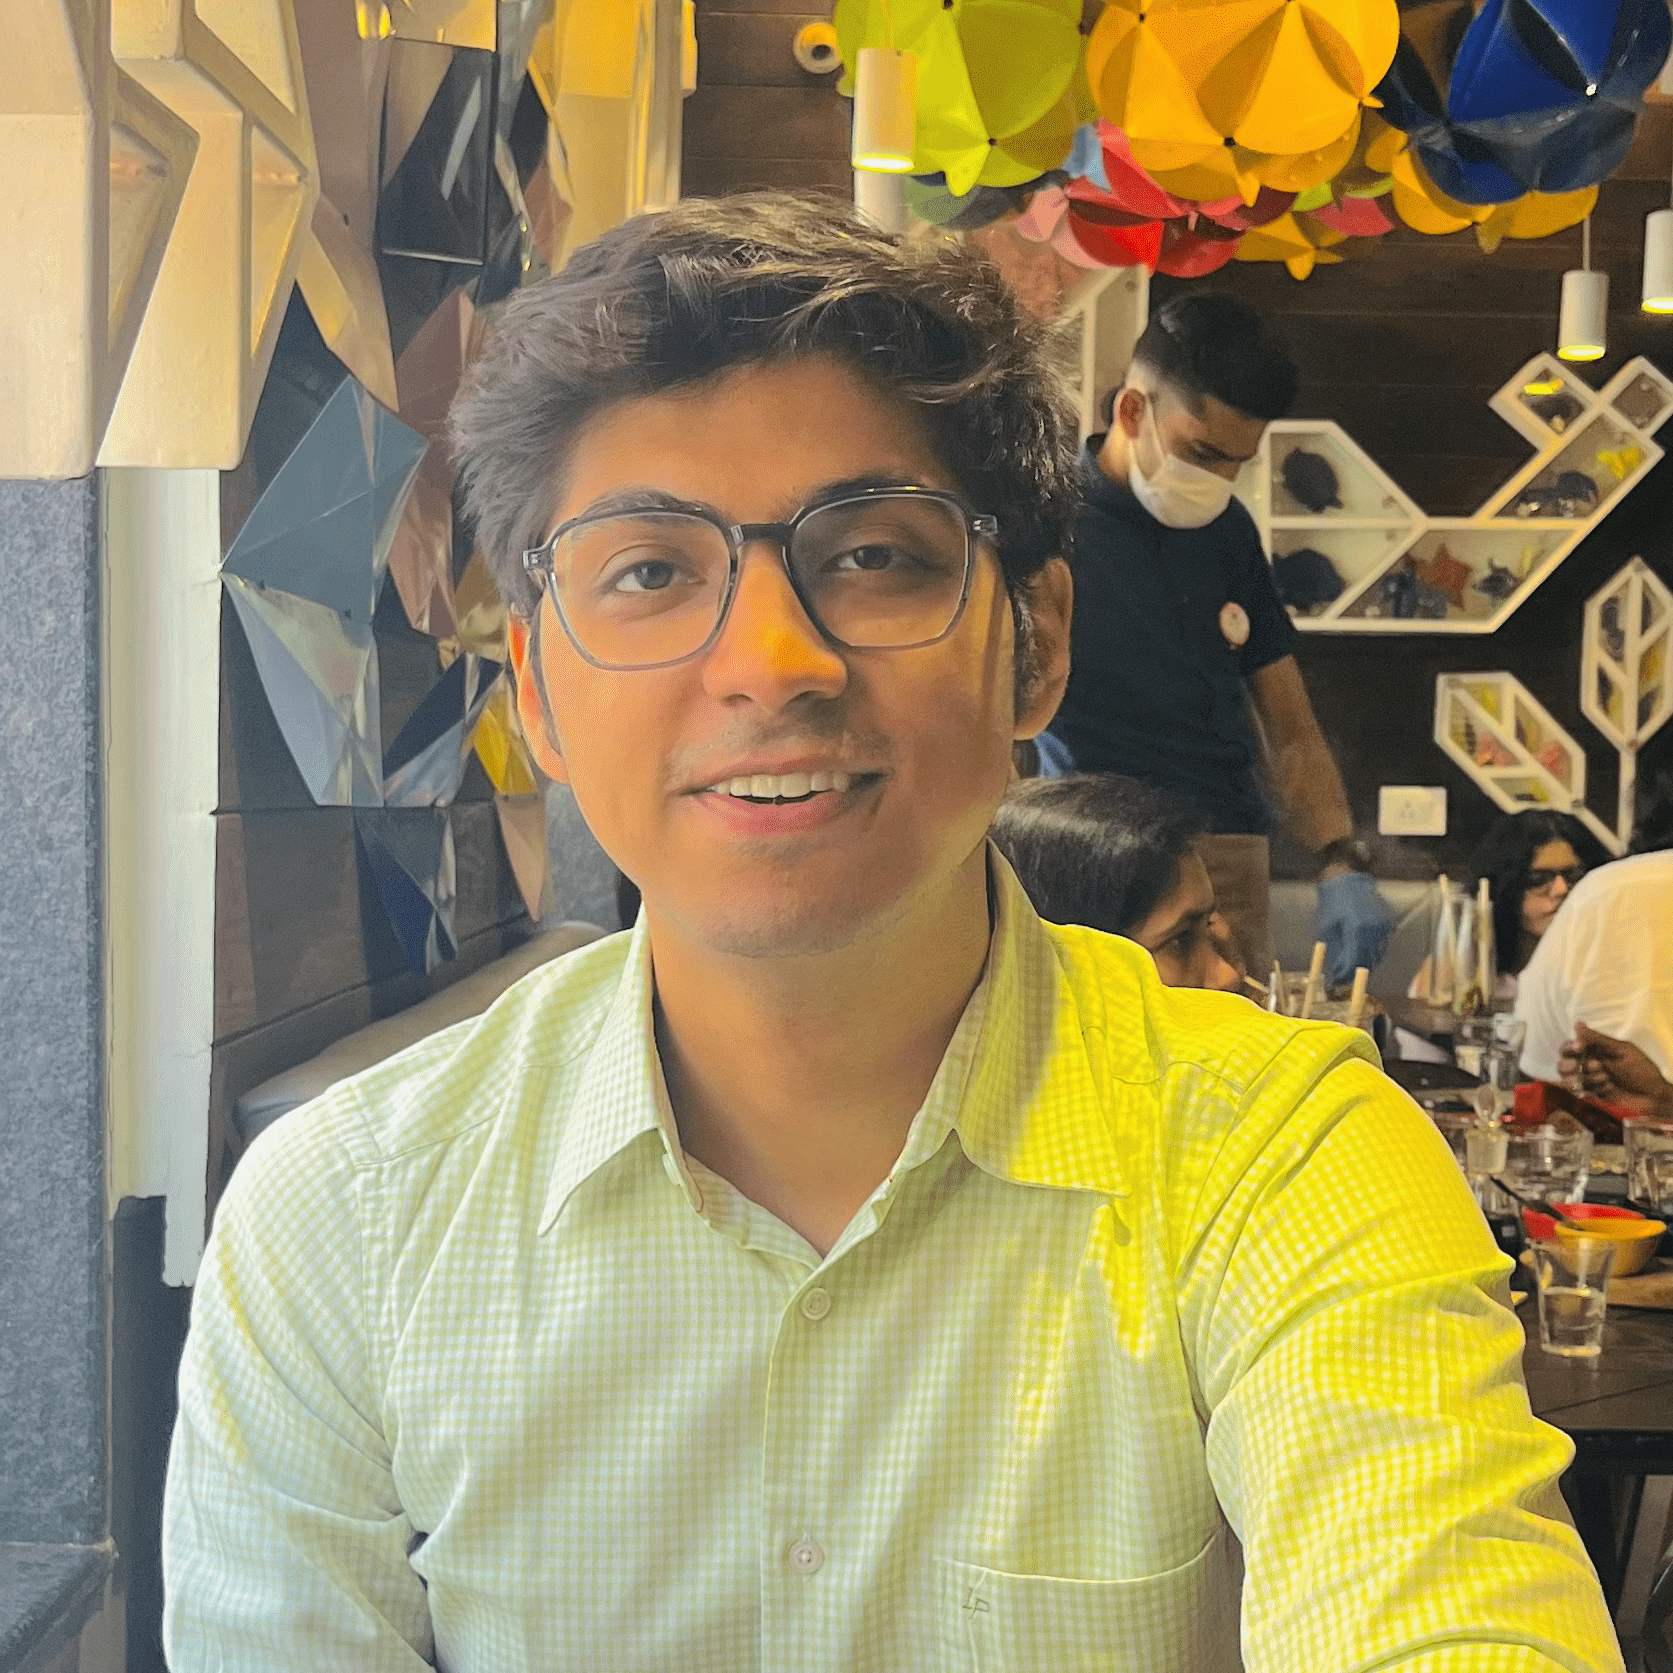 Image of the student Shashwat Pandey